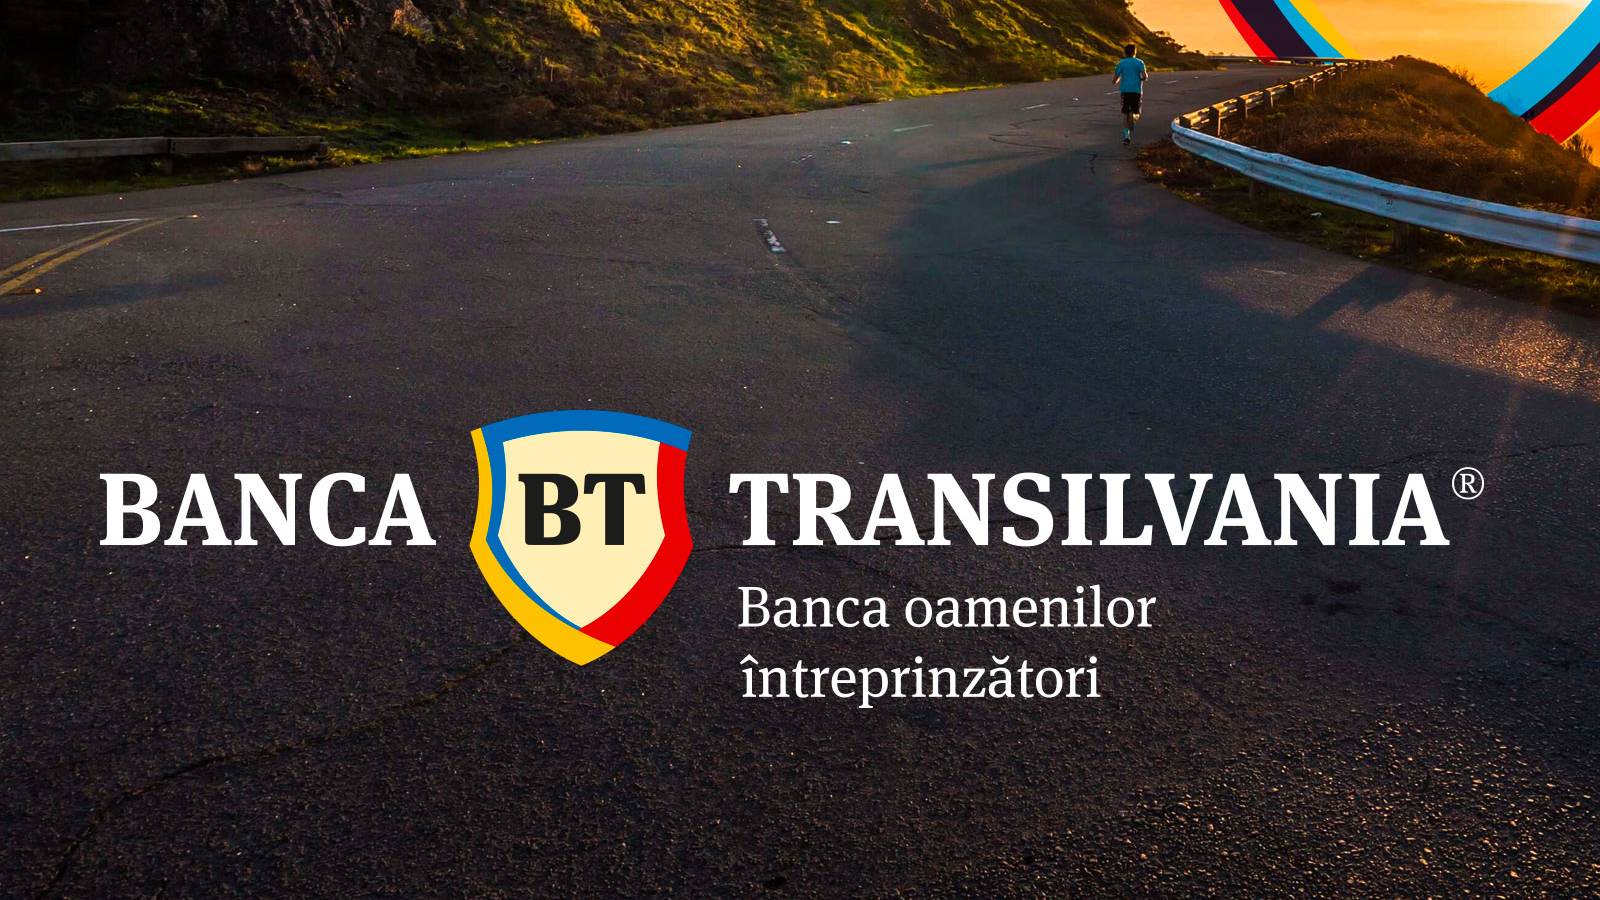 BANCA Transilvania rörelse